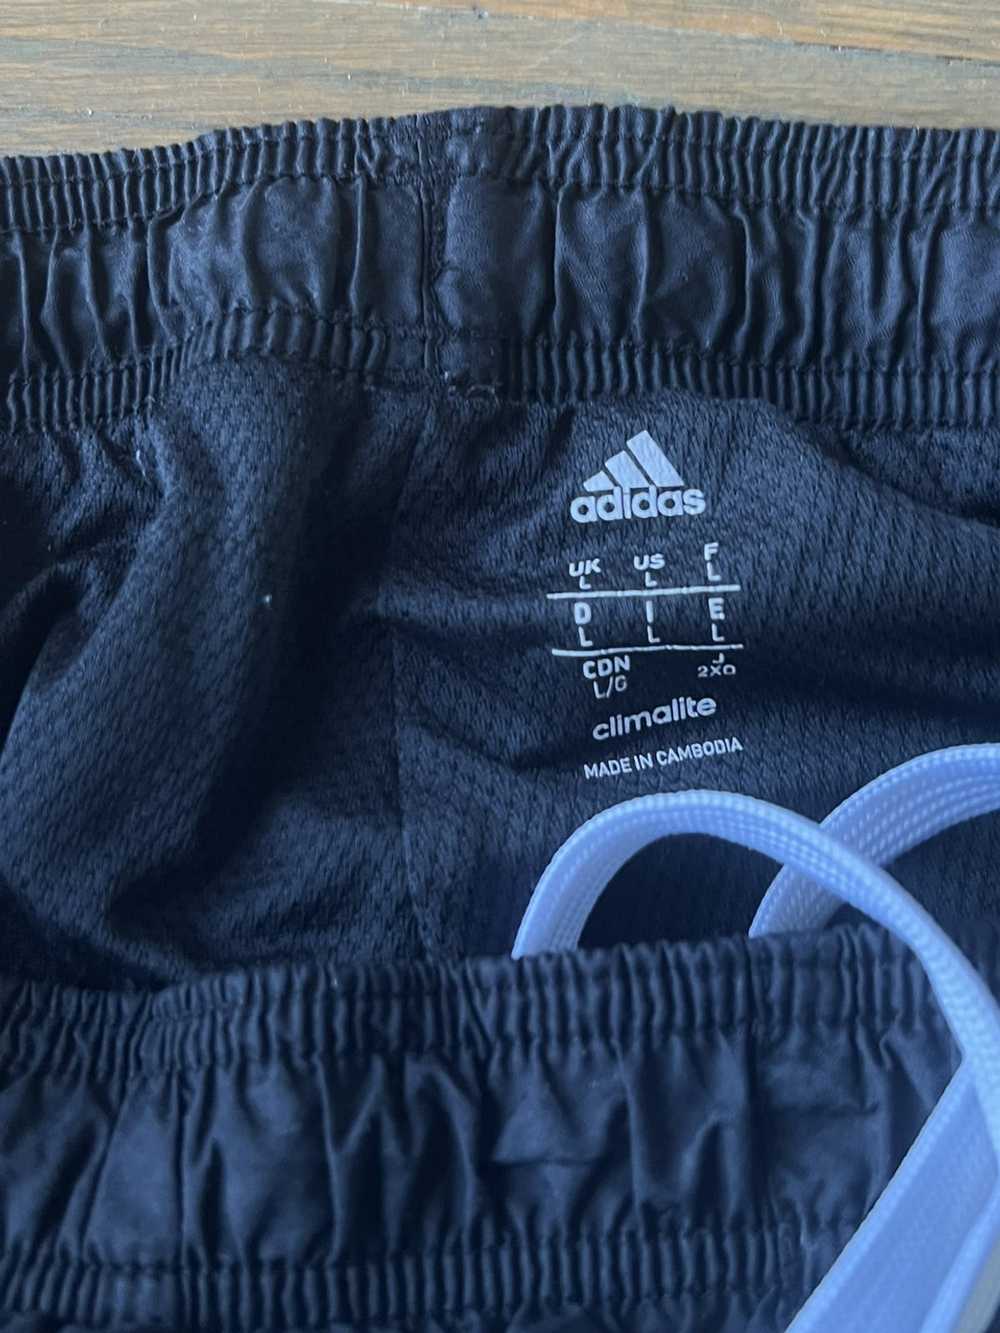 Adidas Adidas zip up track pants - image 3